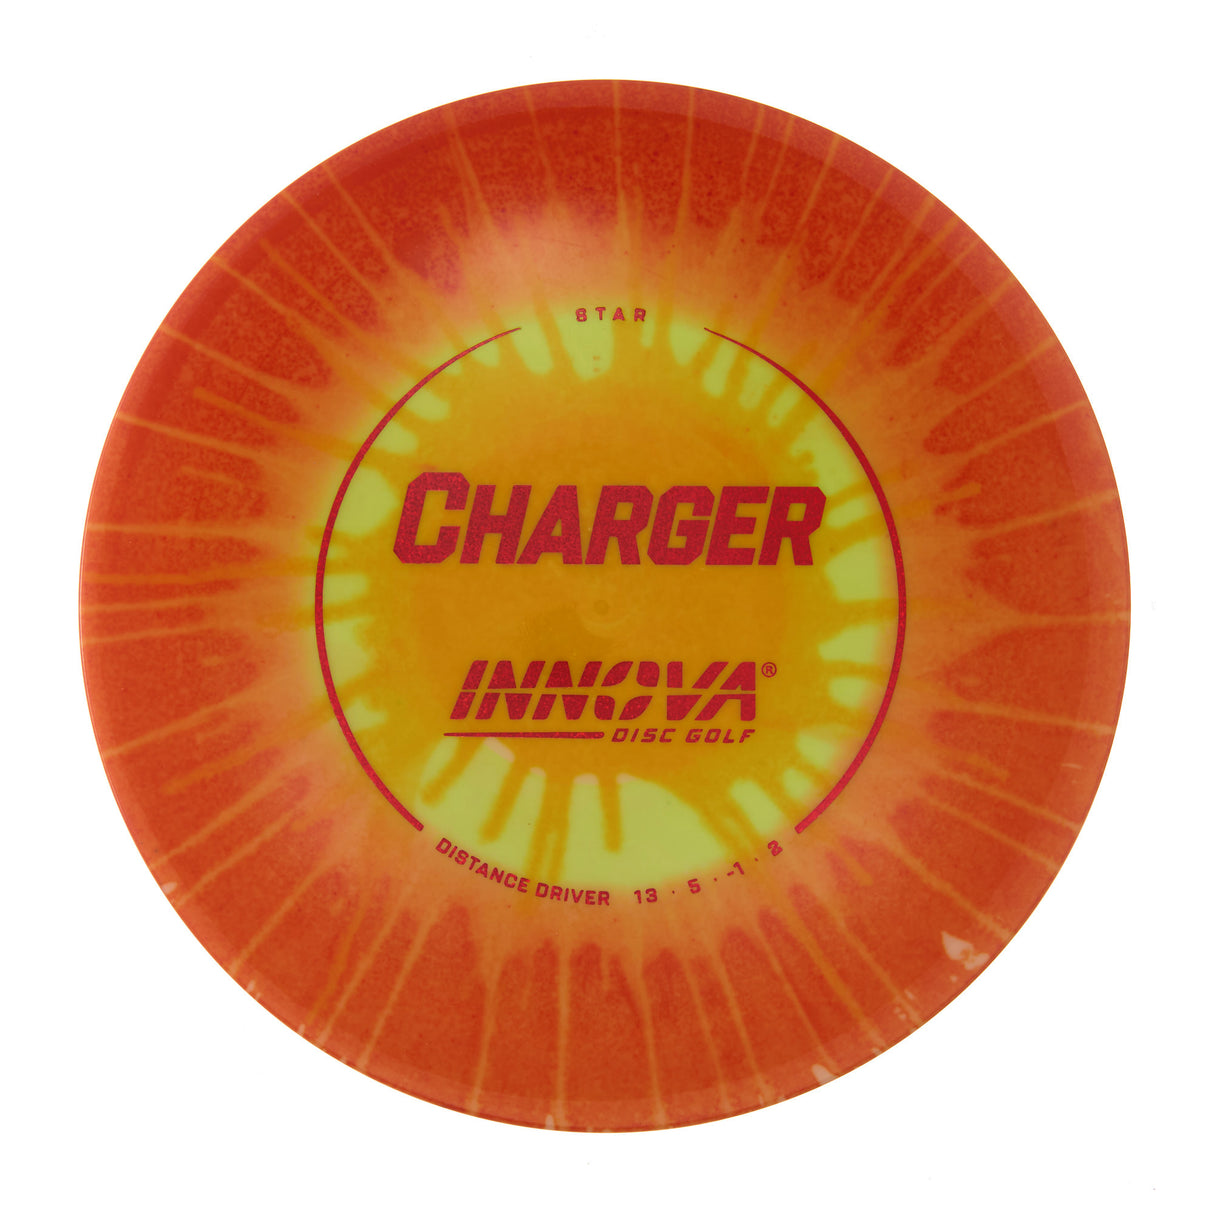 Innova Charger - Star I-Dye  176g | Style 0012